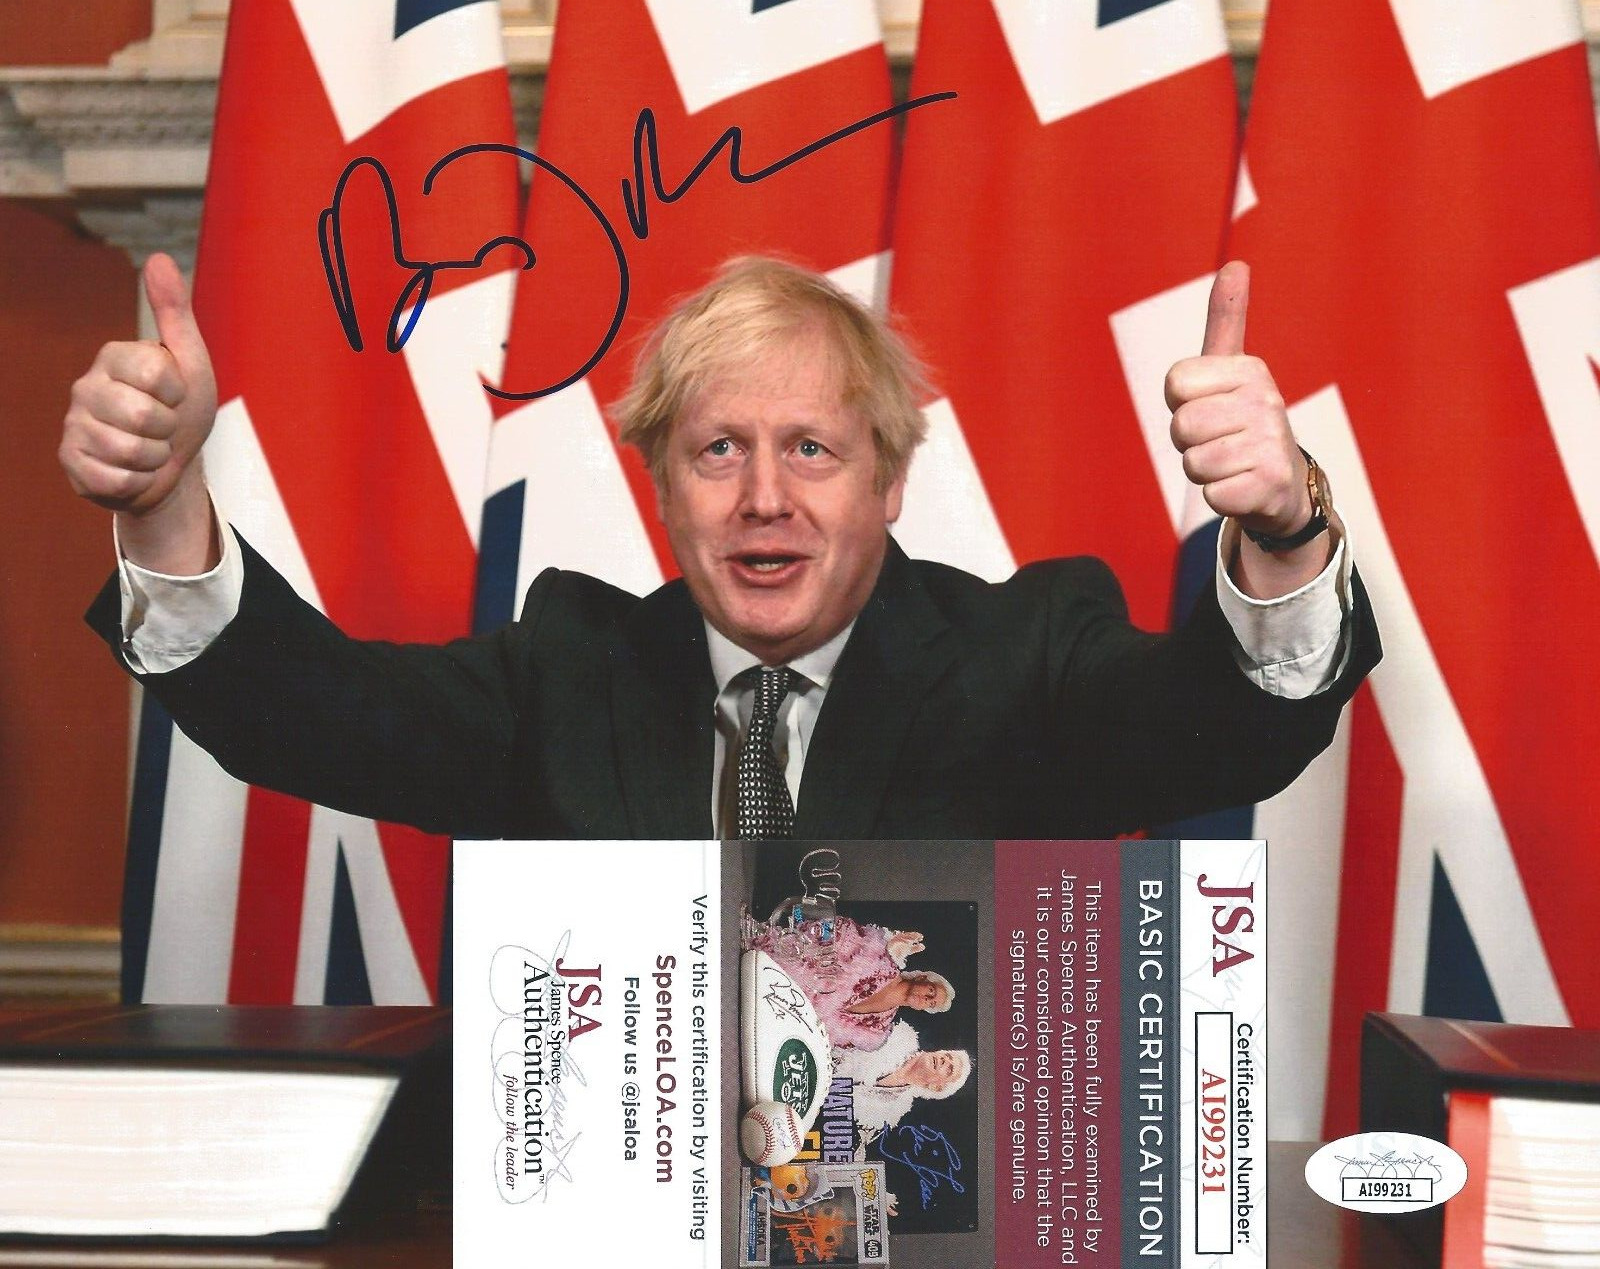 Boris Johnson Signed 8x10 Photo w JSA COA #AI99231 United Kingdom Prime Minister